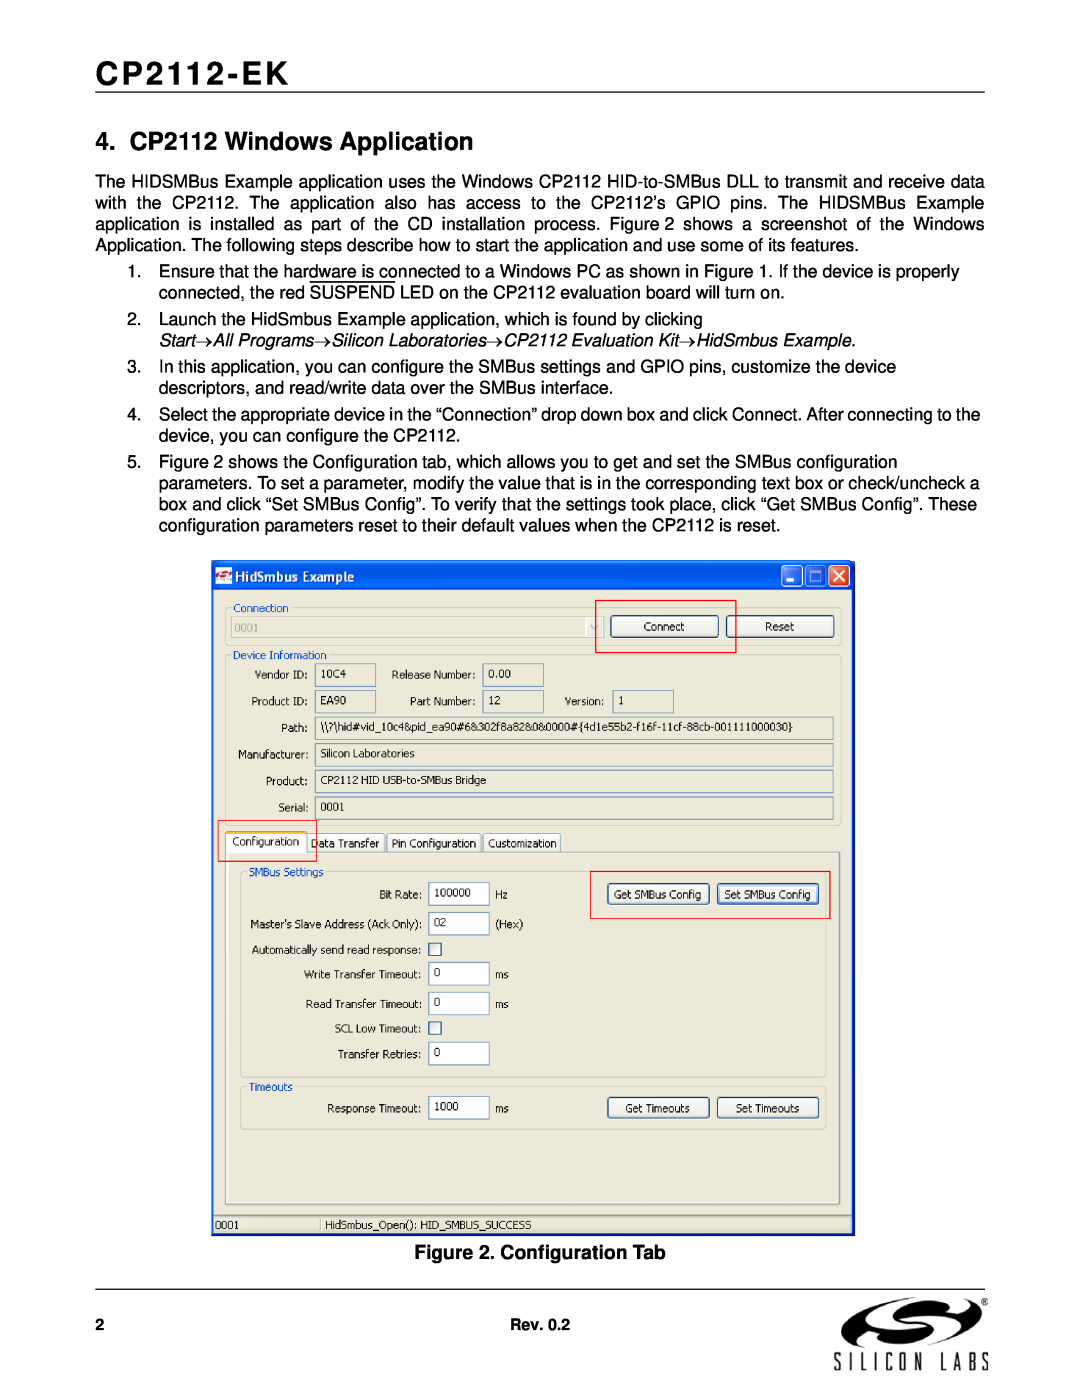 Silicon Laboratories CP2112-EK manual 4. CP2112 Windows Application, Configuration Tab 